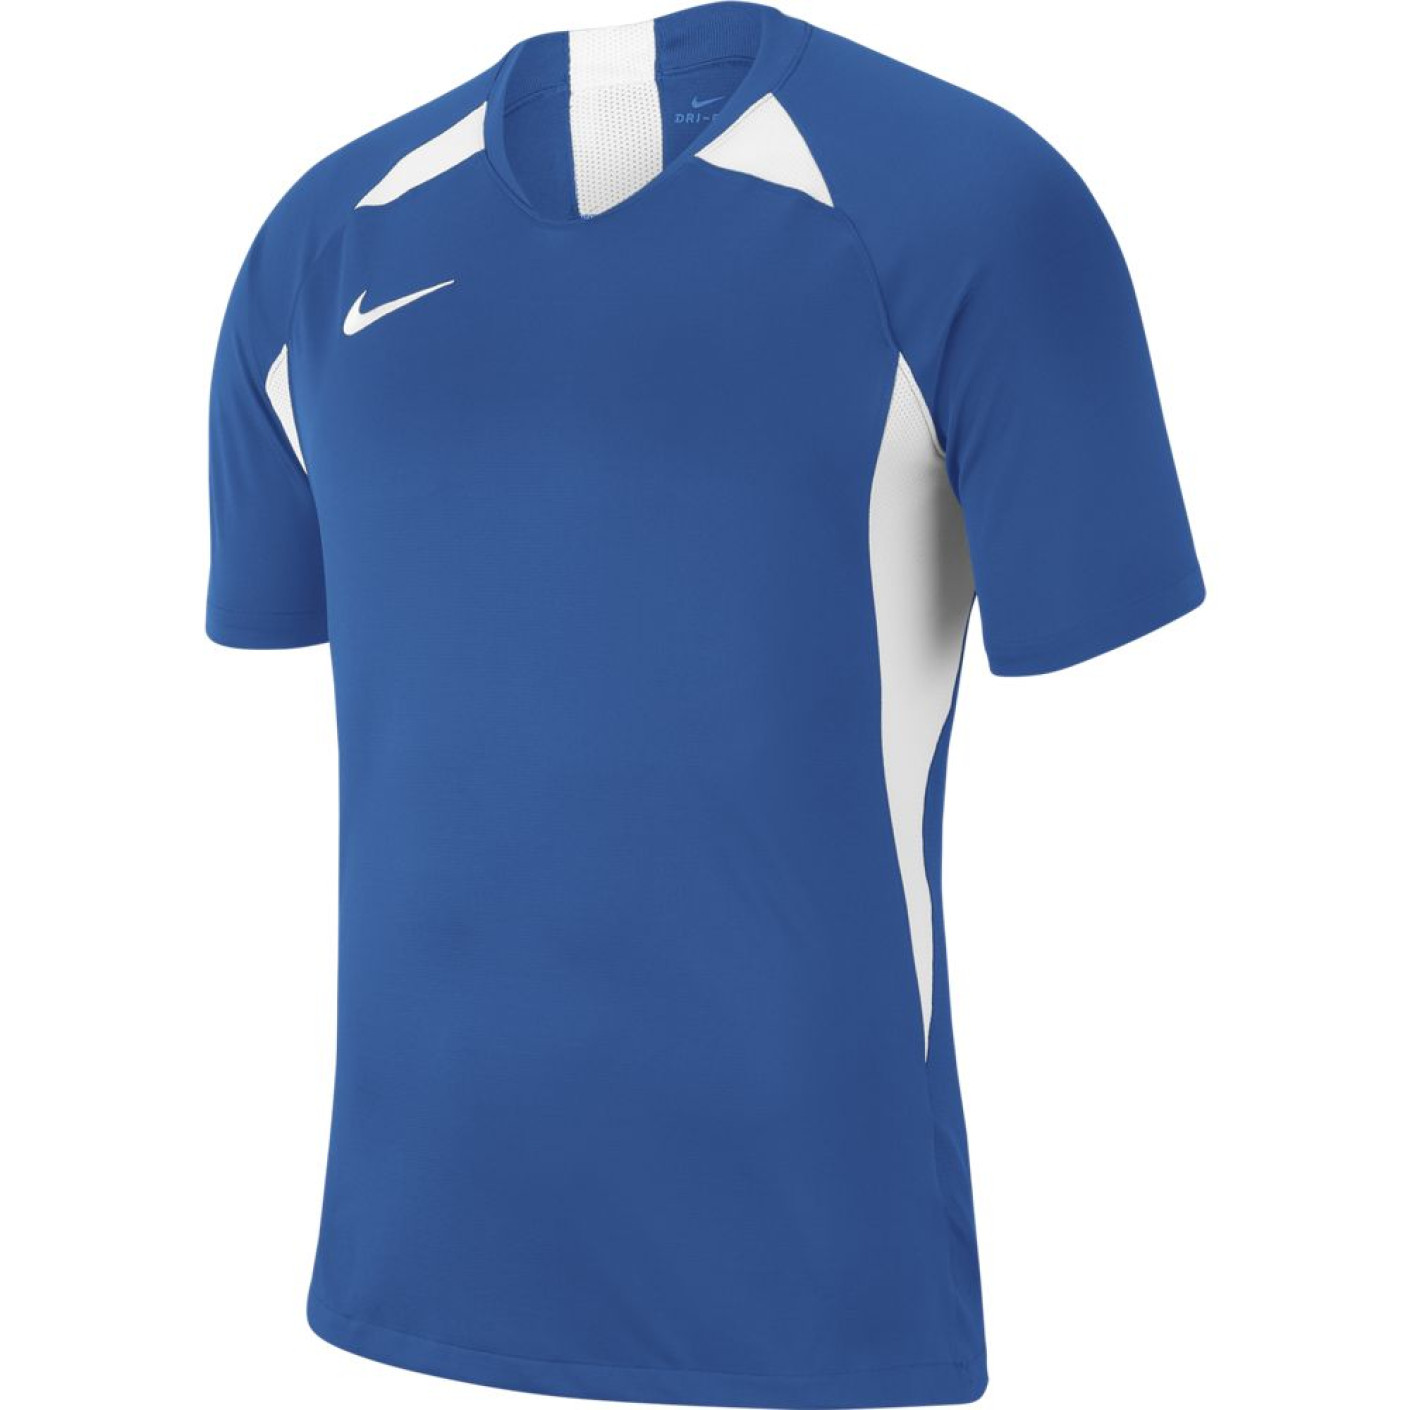 Nike Dry Legend Voetbalshirt Blauw Wit